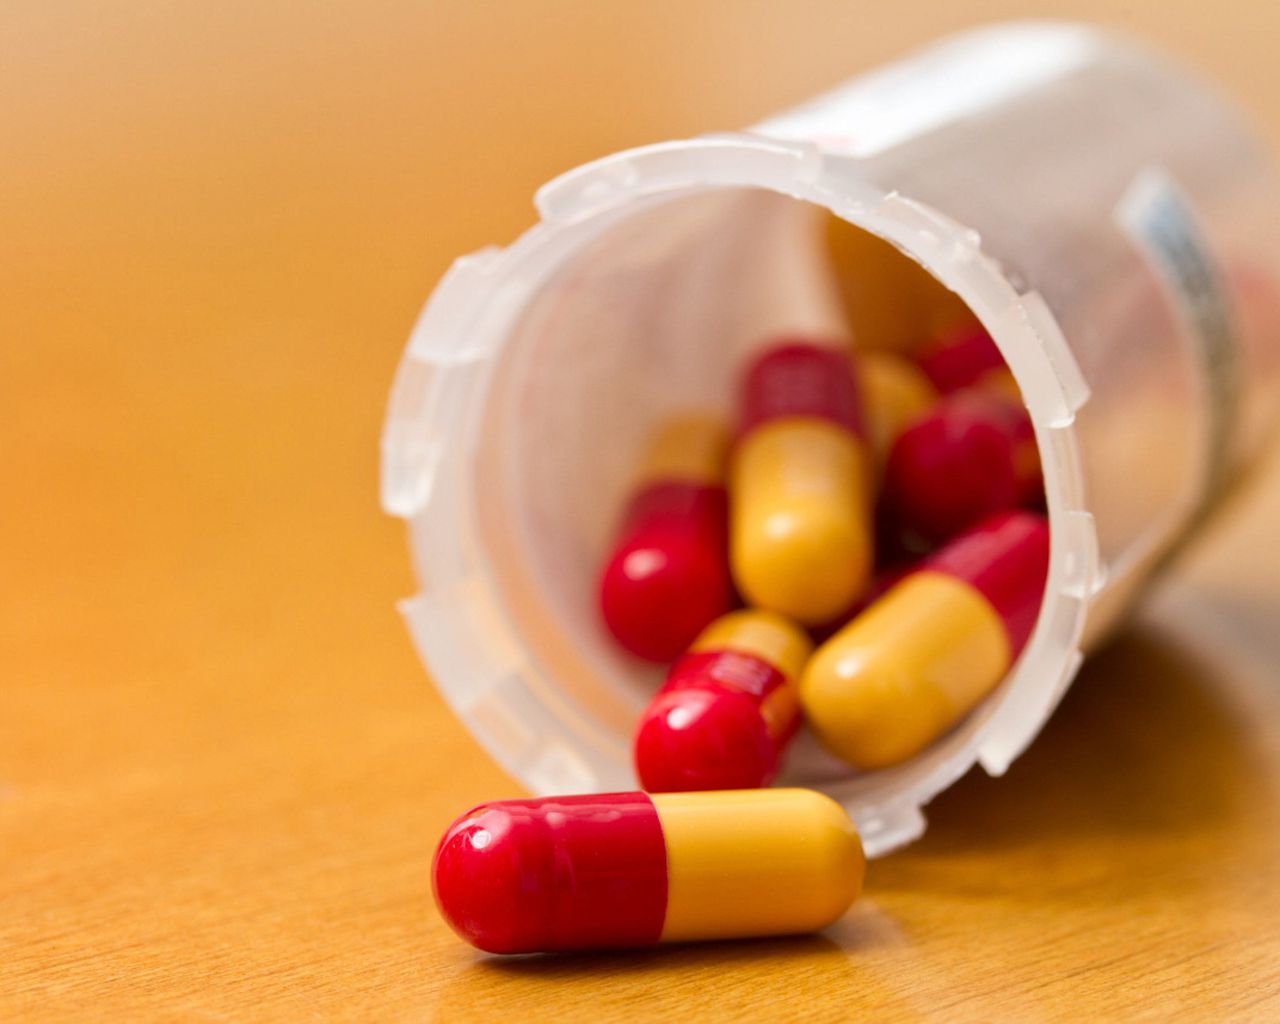 Antibiotic resistance a growing crisis